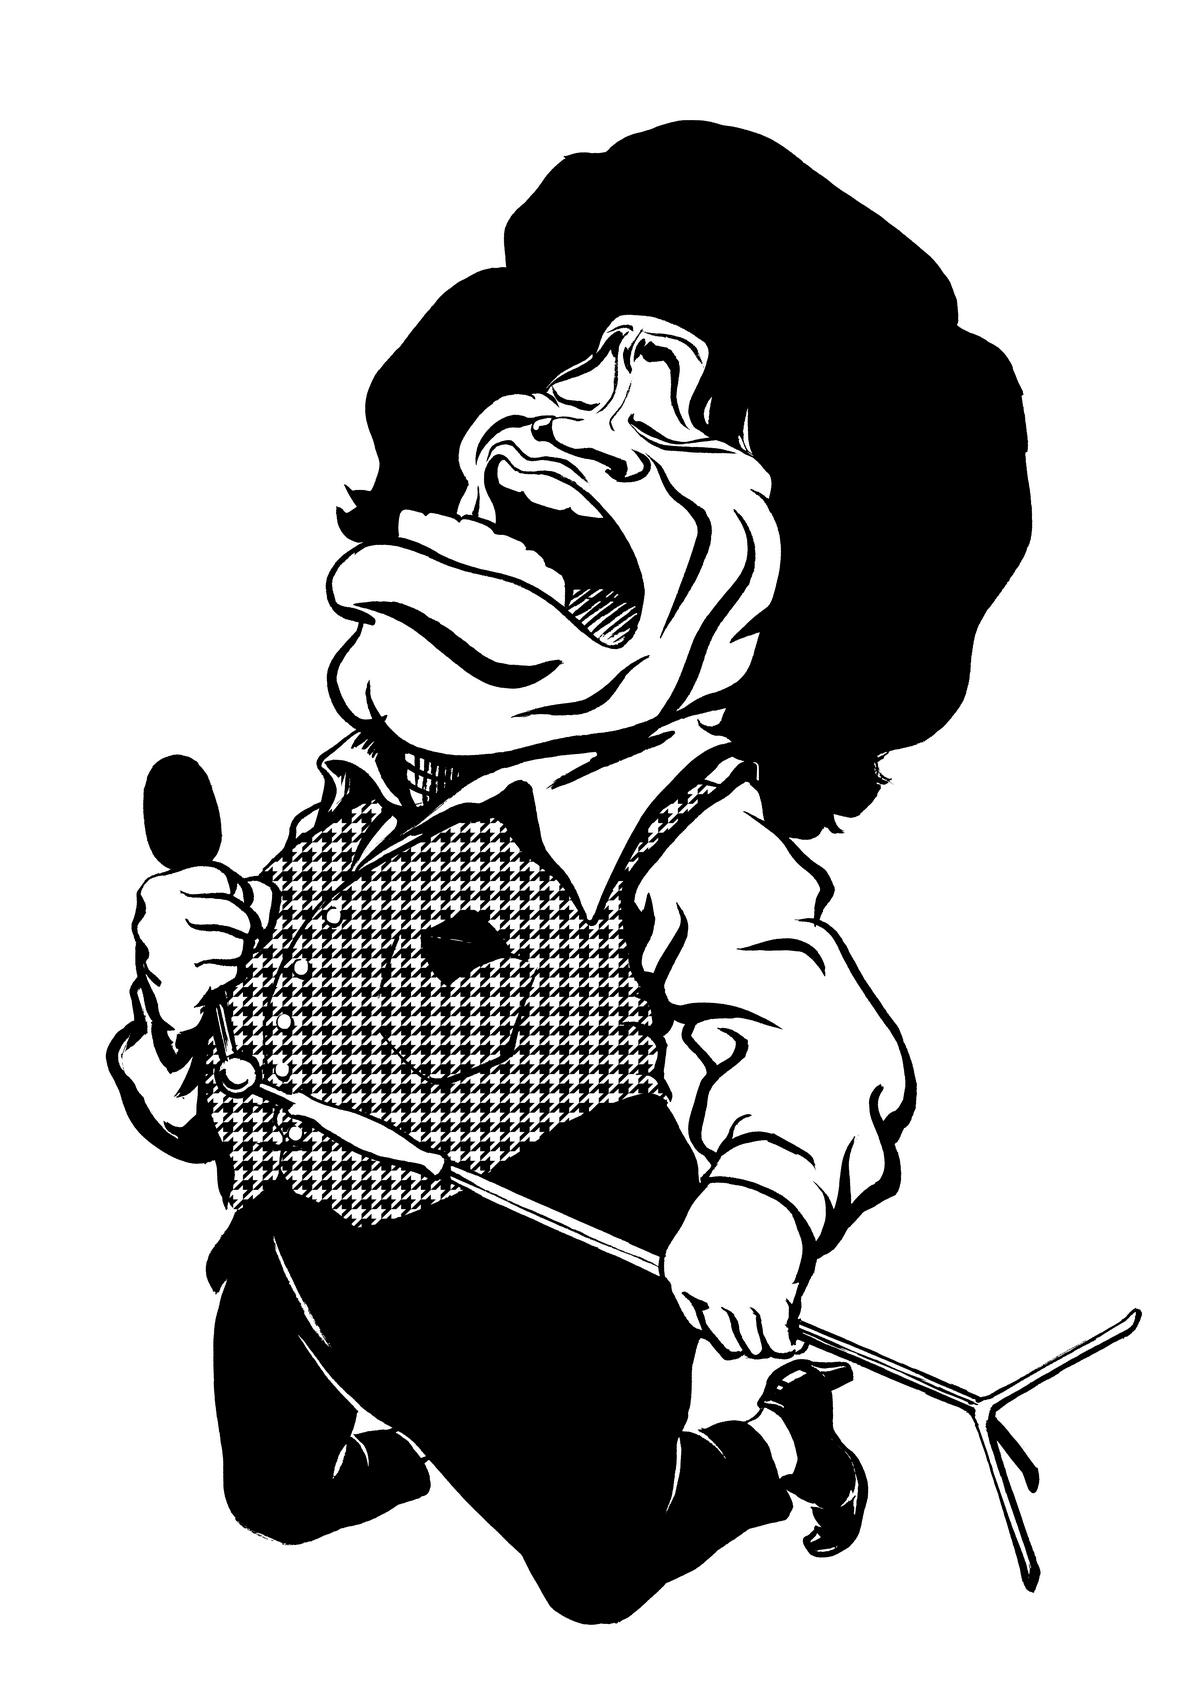 James Brown caricature